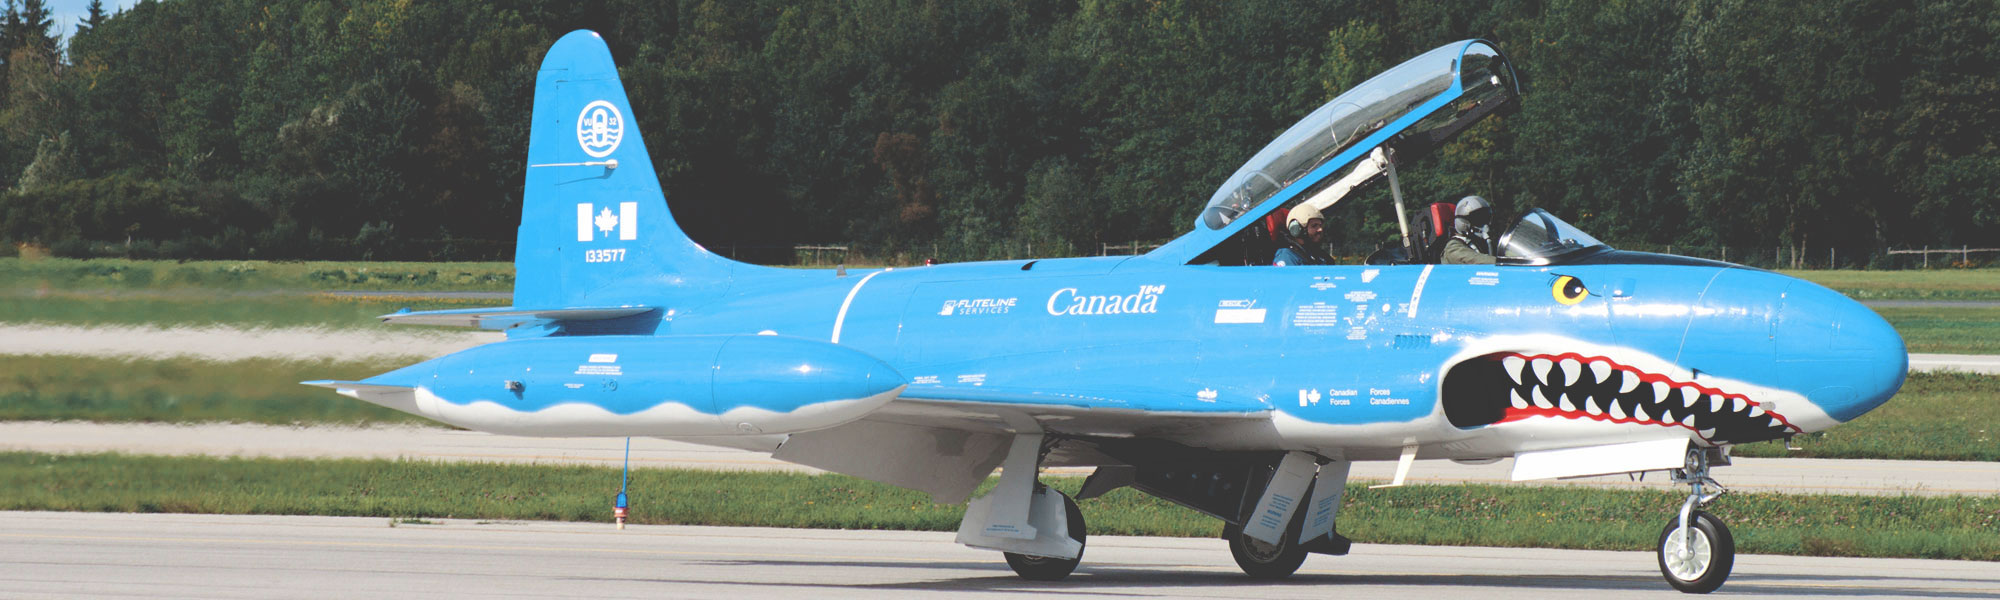 T-33 (T-Bird) in Canada fliegen